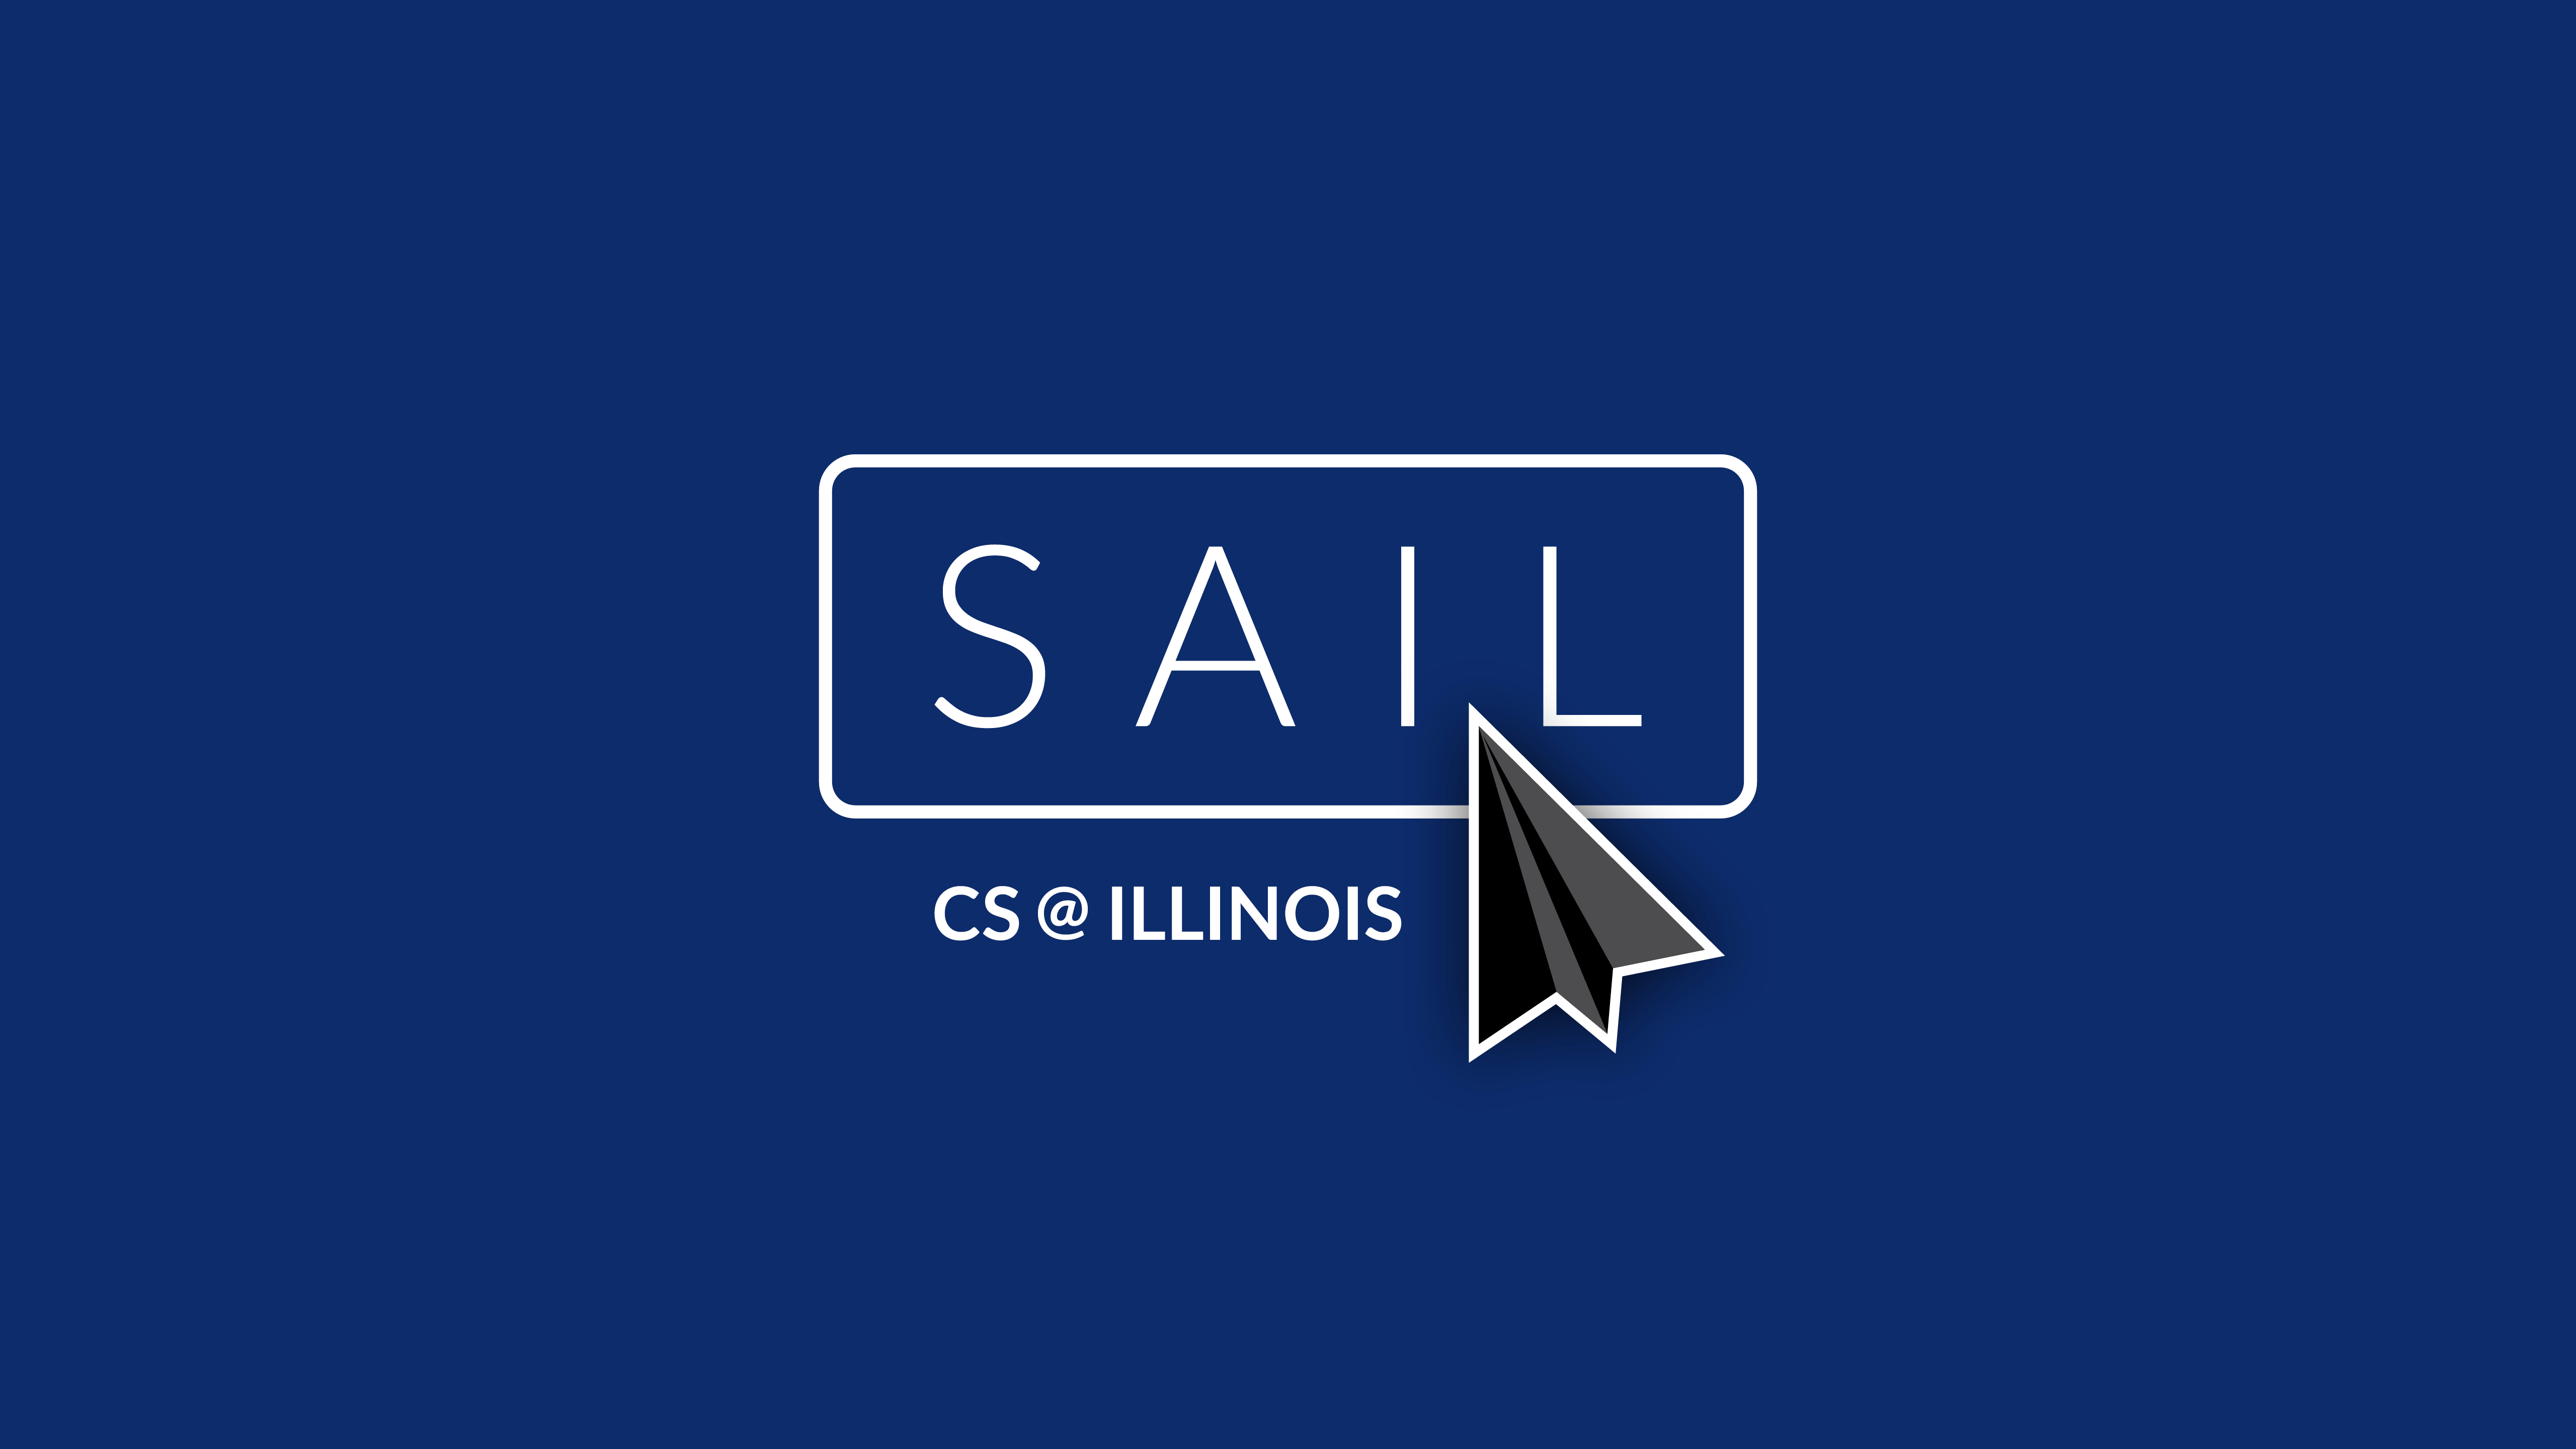 Illinois Computer Science - SAIL